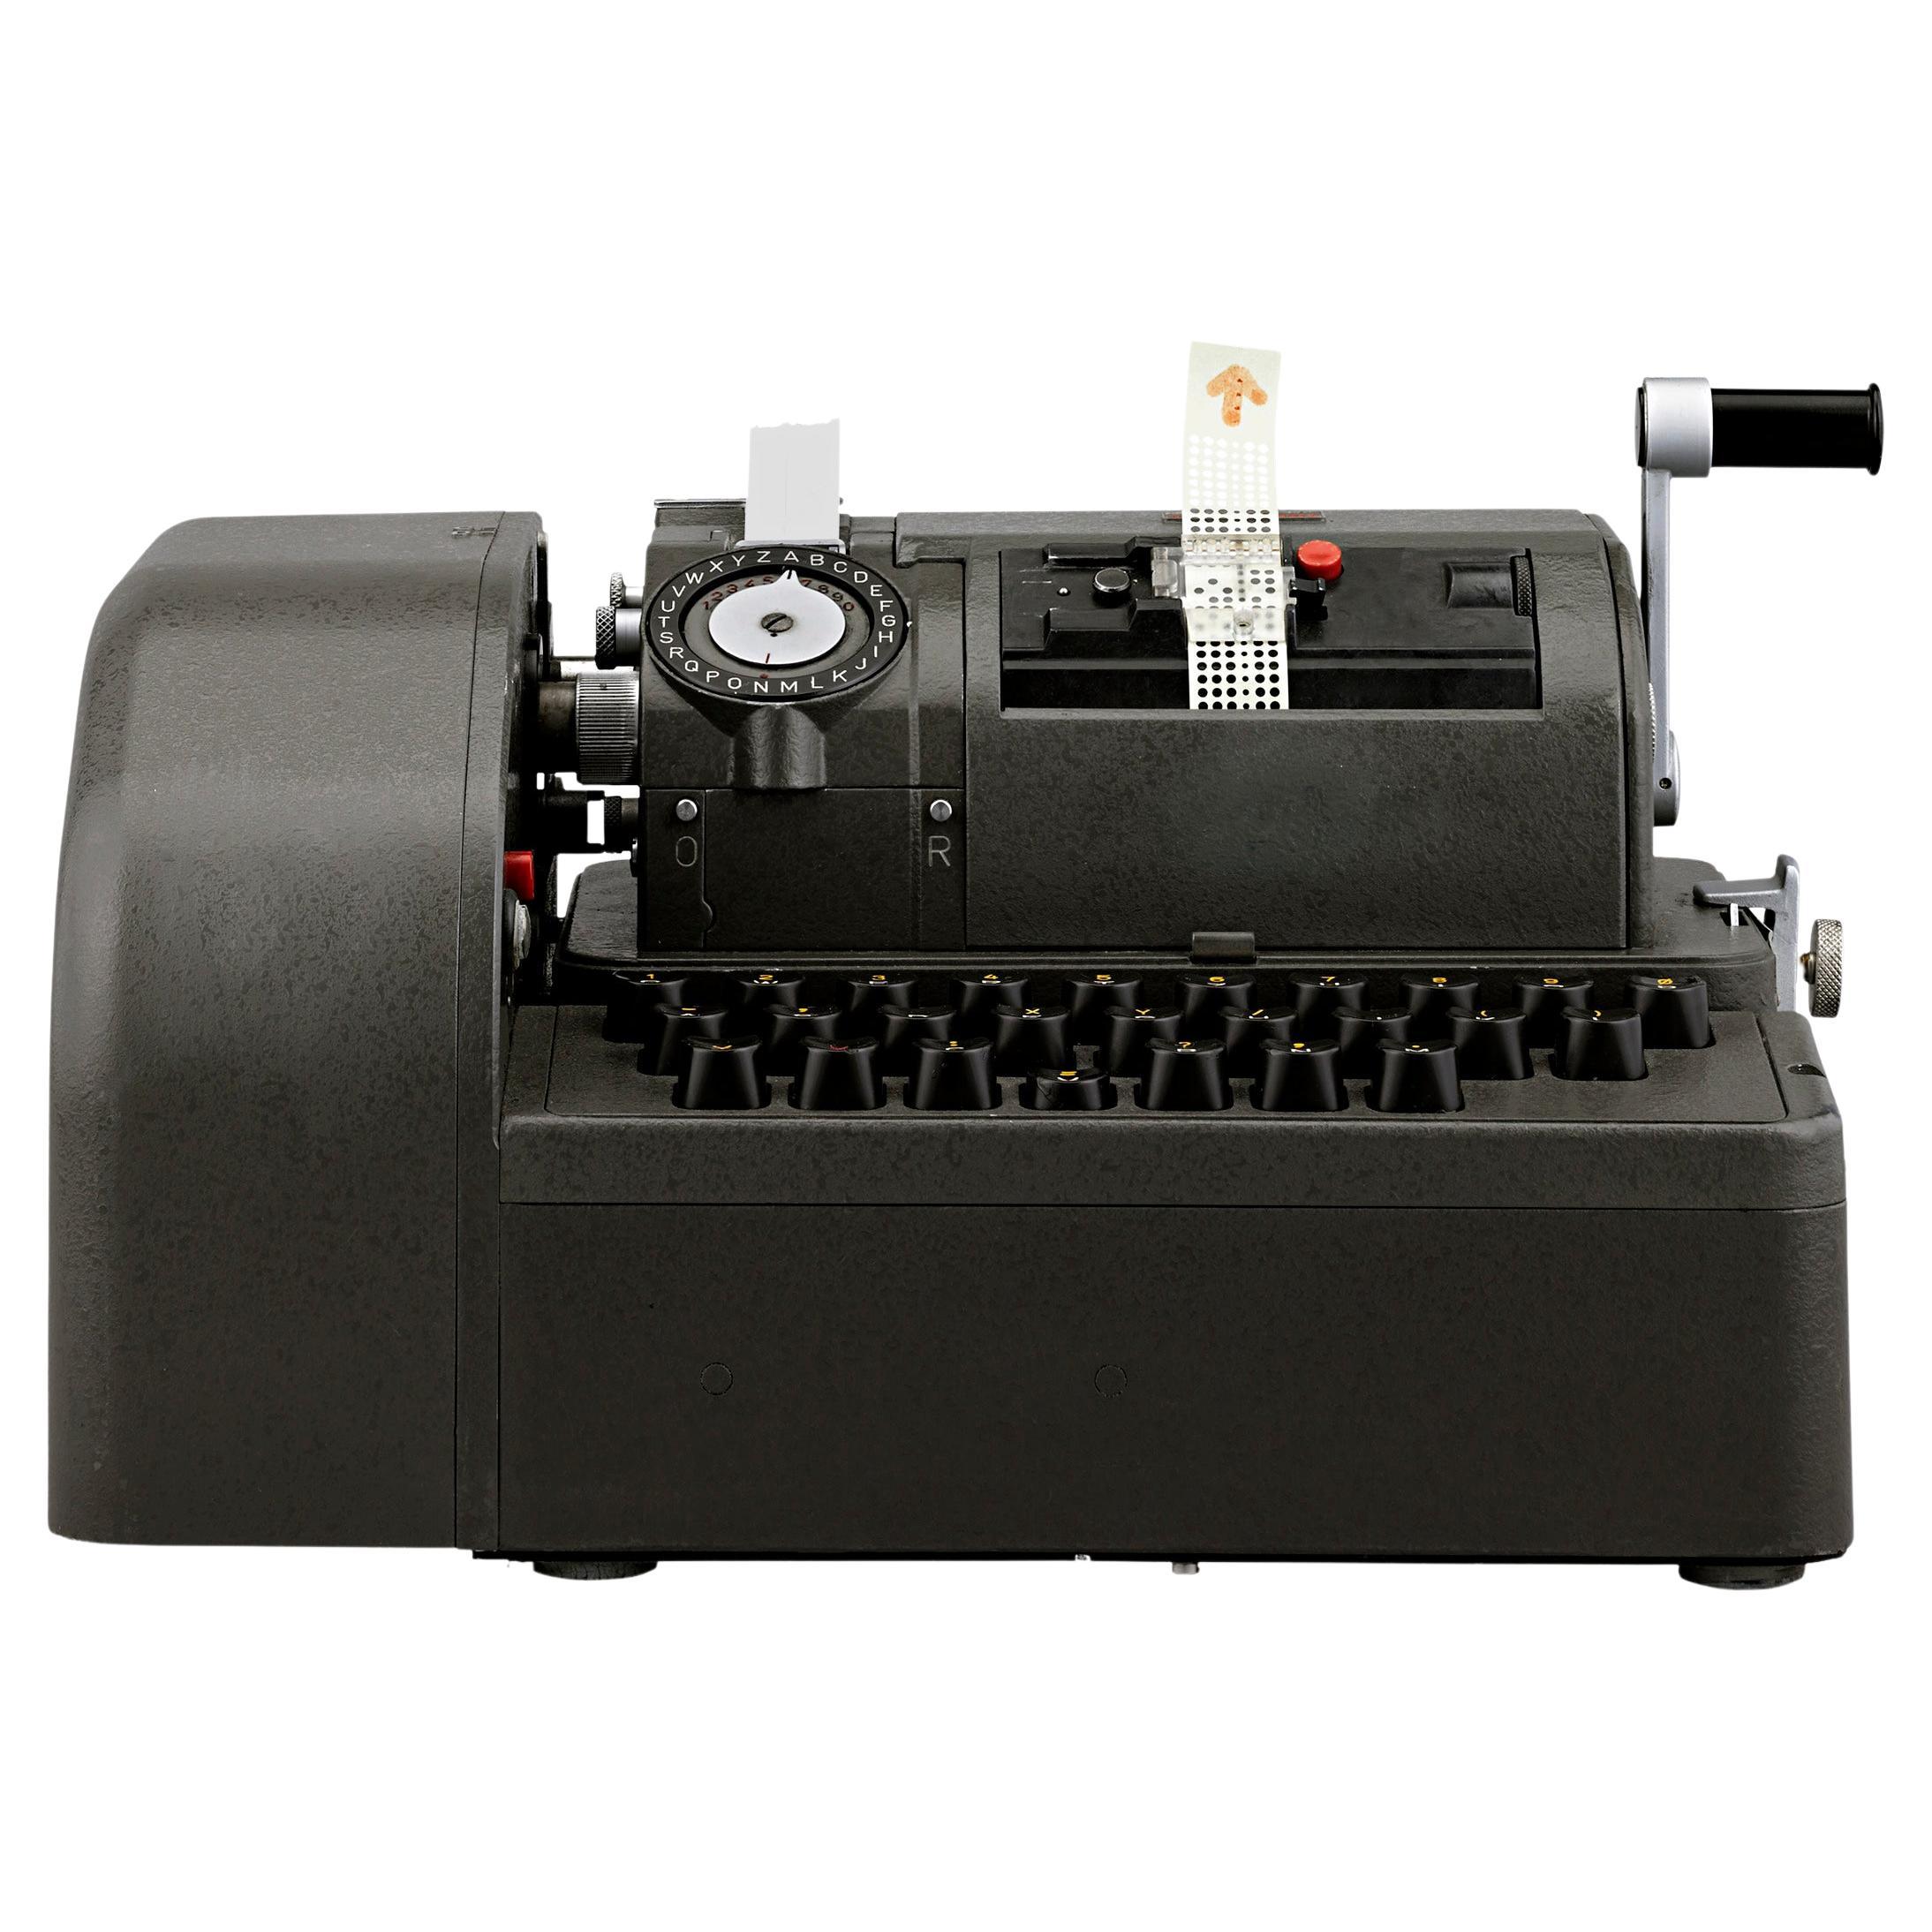 Cx-52 Model Swiss Cipher Machine